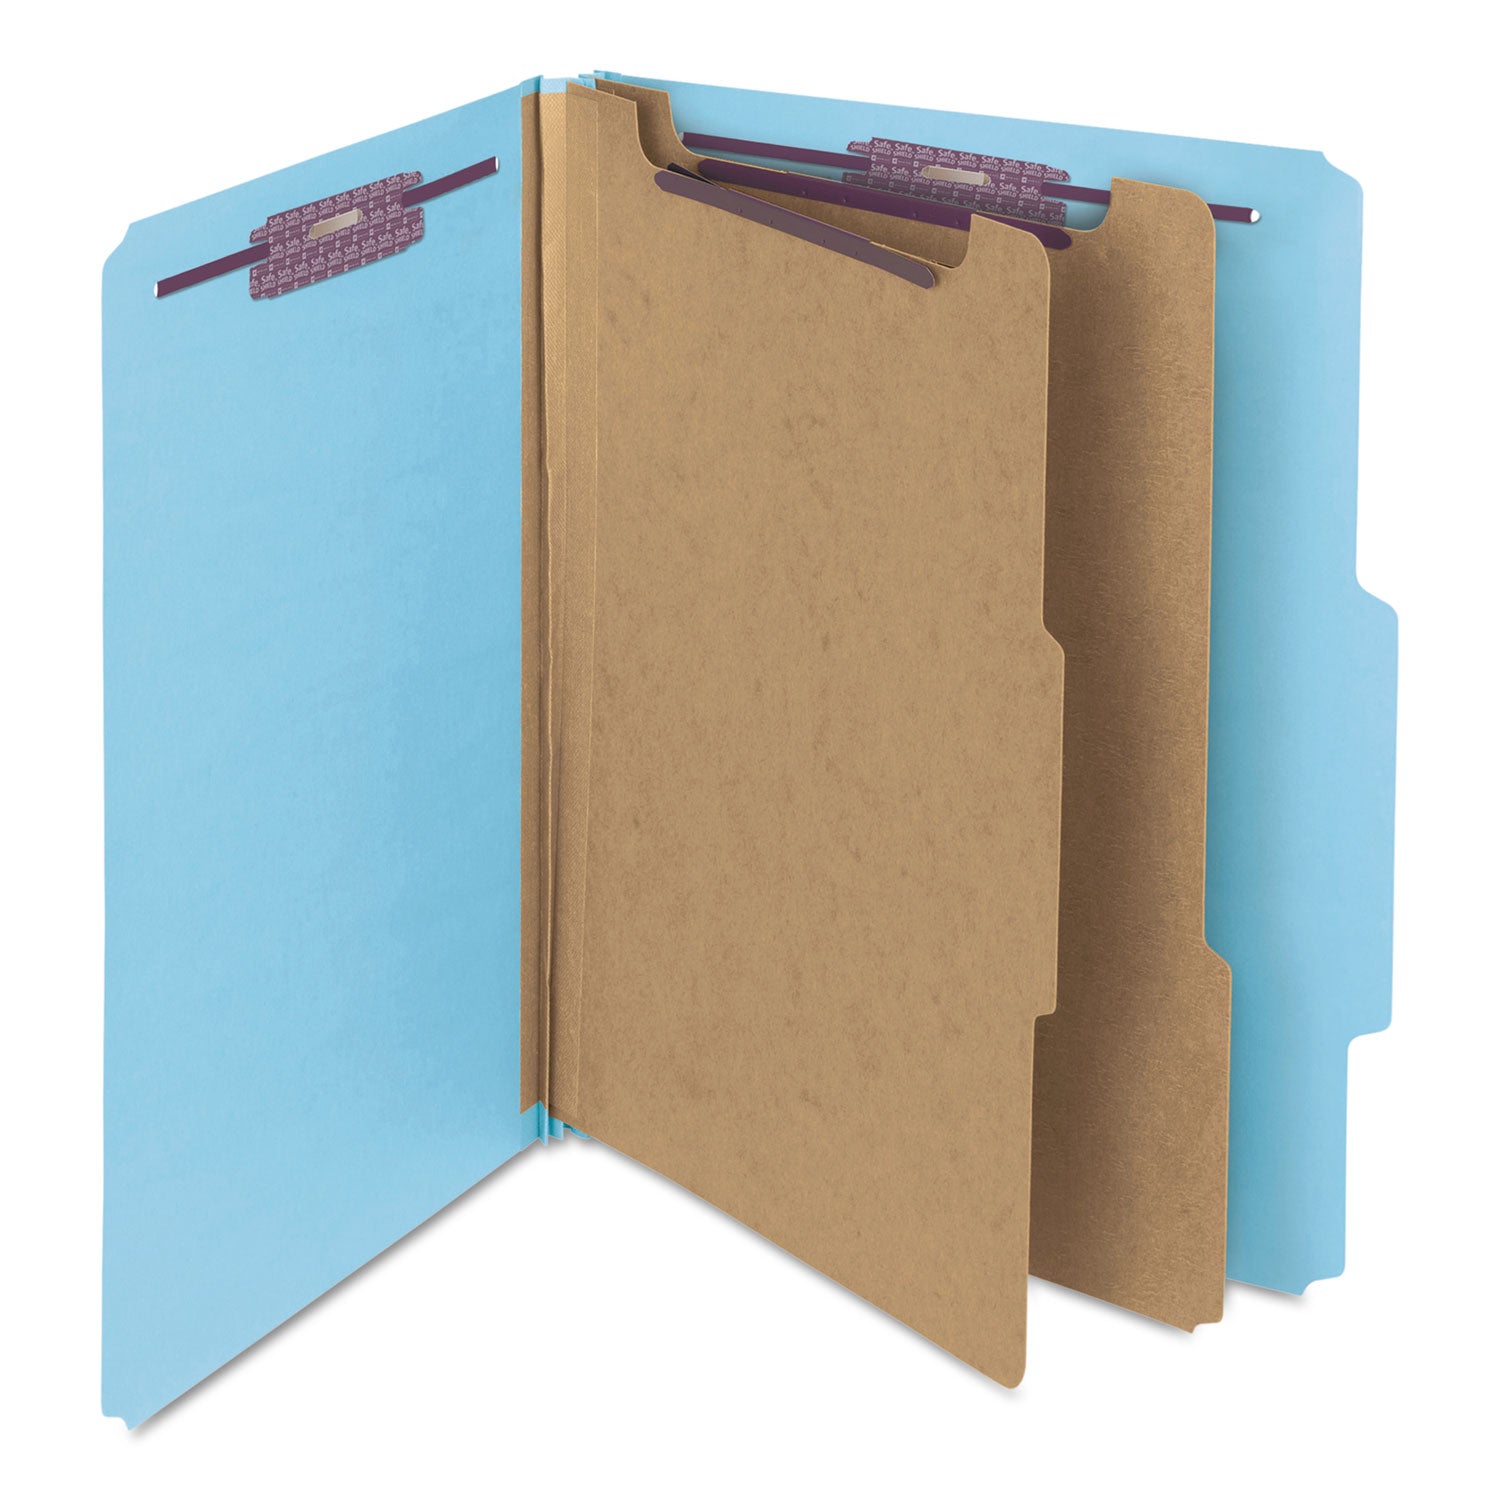 Six-Section Pressboard Top Tab Classification Folders, Six SafeSHIELD Fasteners, 2 Dividers, Letter Size, Blue, 10/Box - 